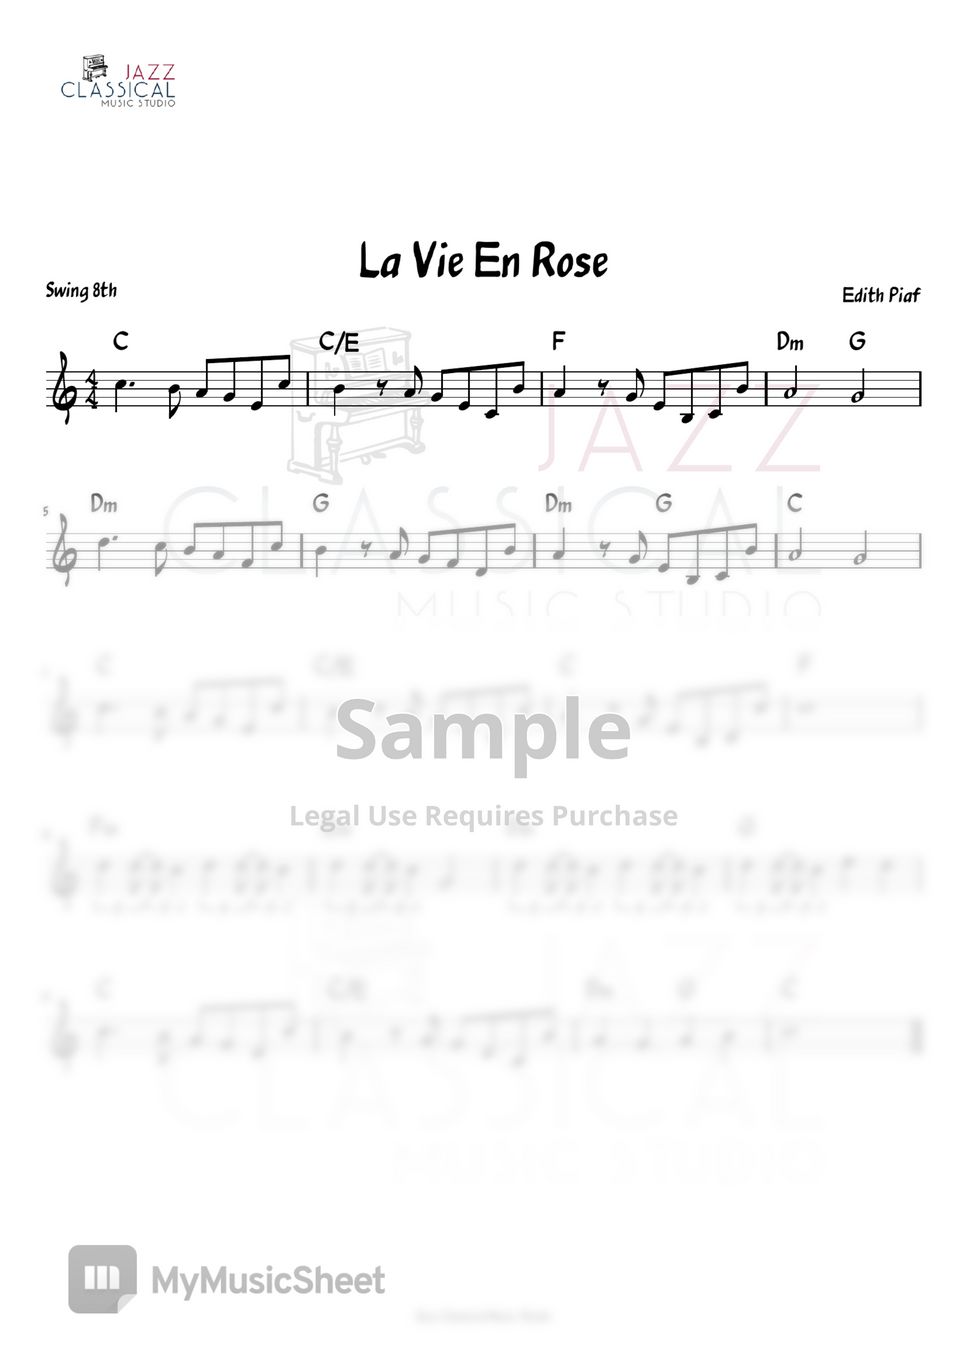 Edith Piaf - La Vie En Rose by Jazz Classical Music Studio